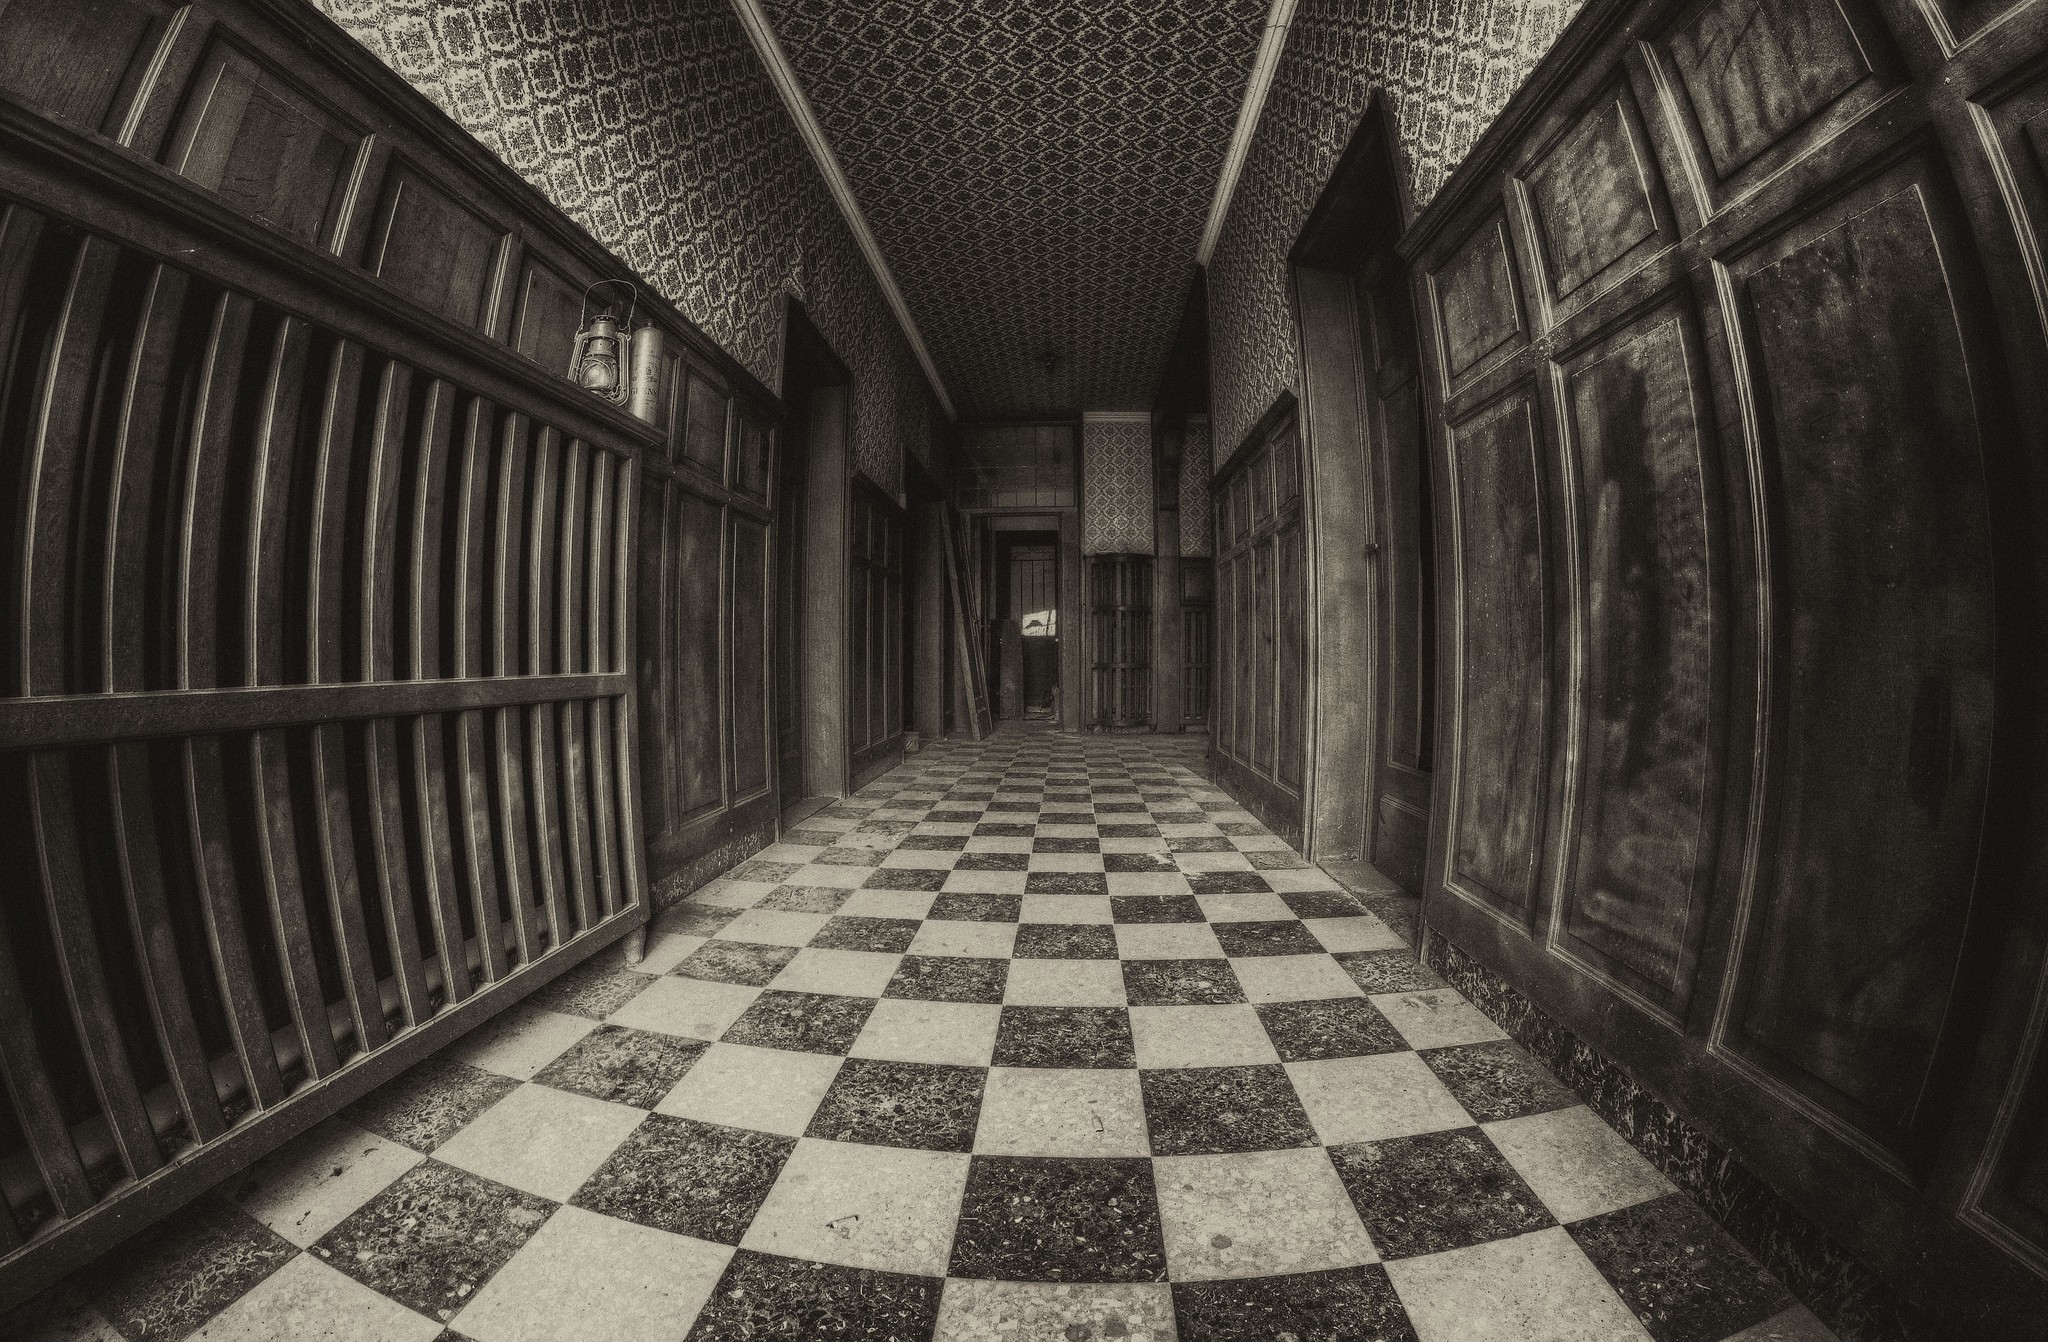 General 2048x1342 digital art monochrome square fisheye lens hallway interior door checkered sepia chess floor